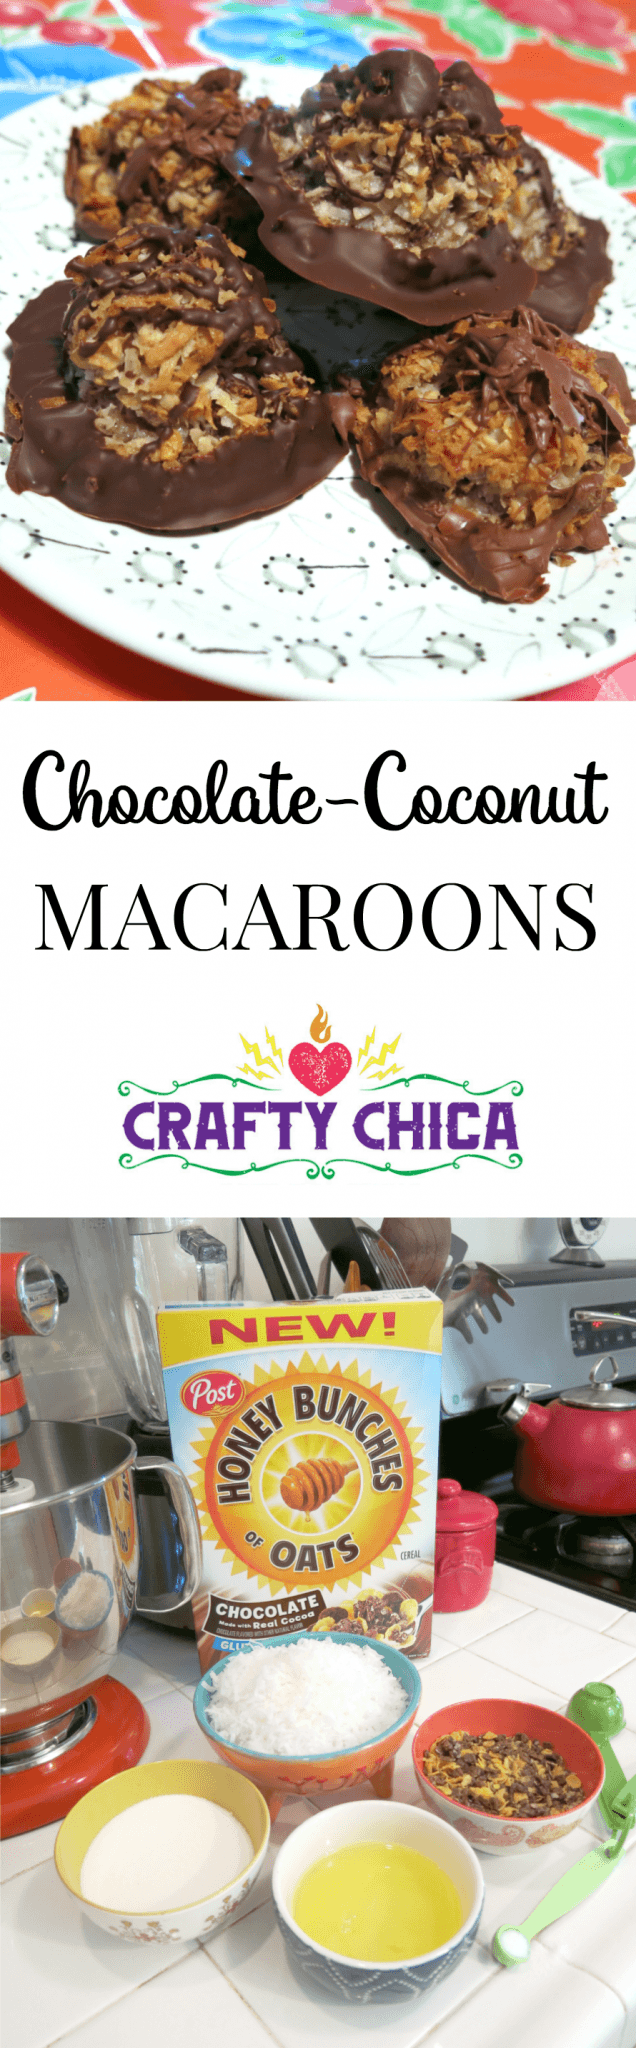 Chocolate-coconut-macaroons